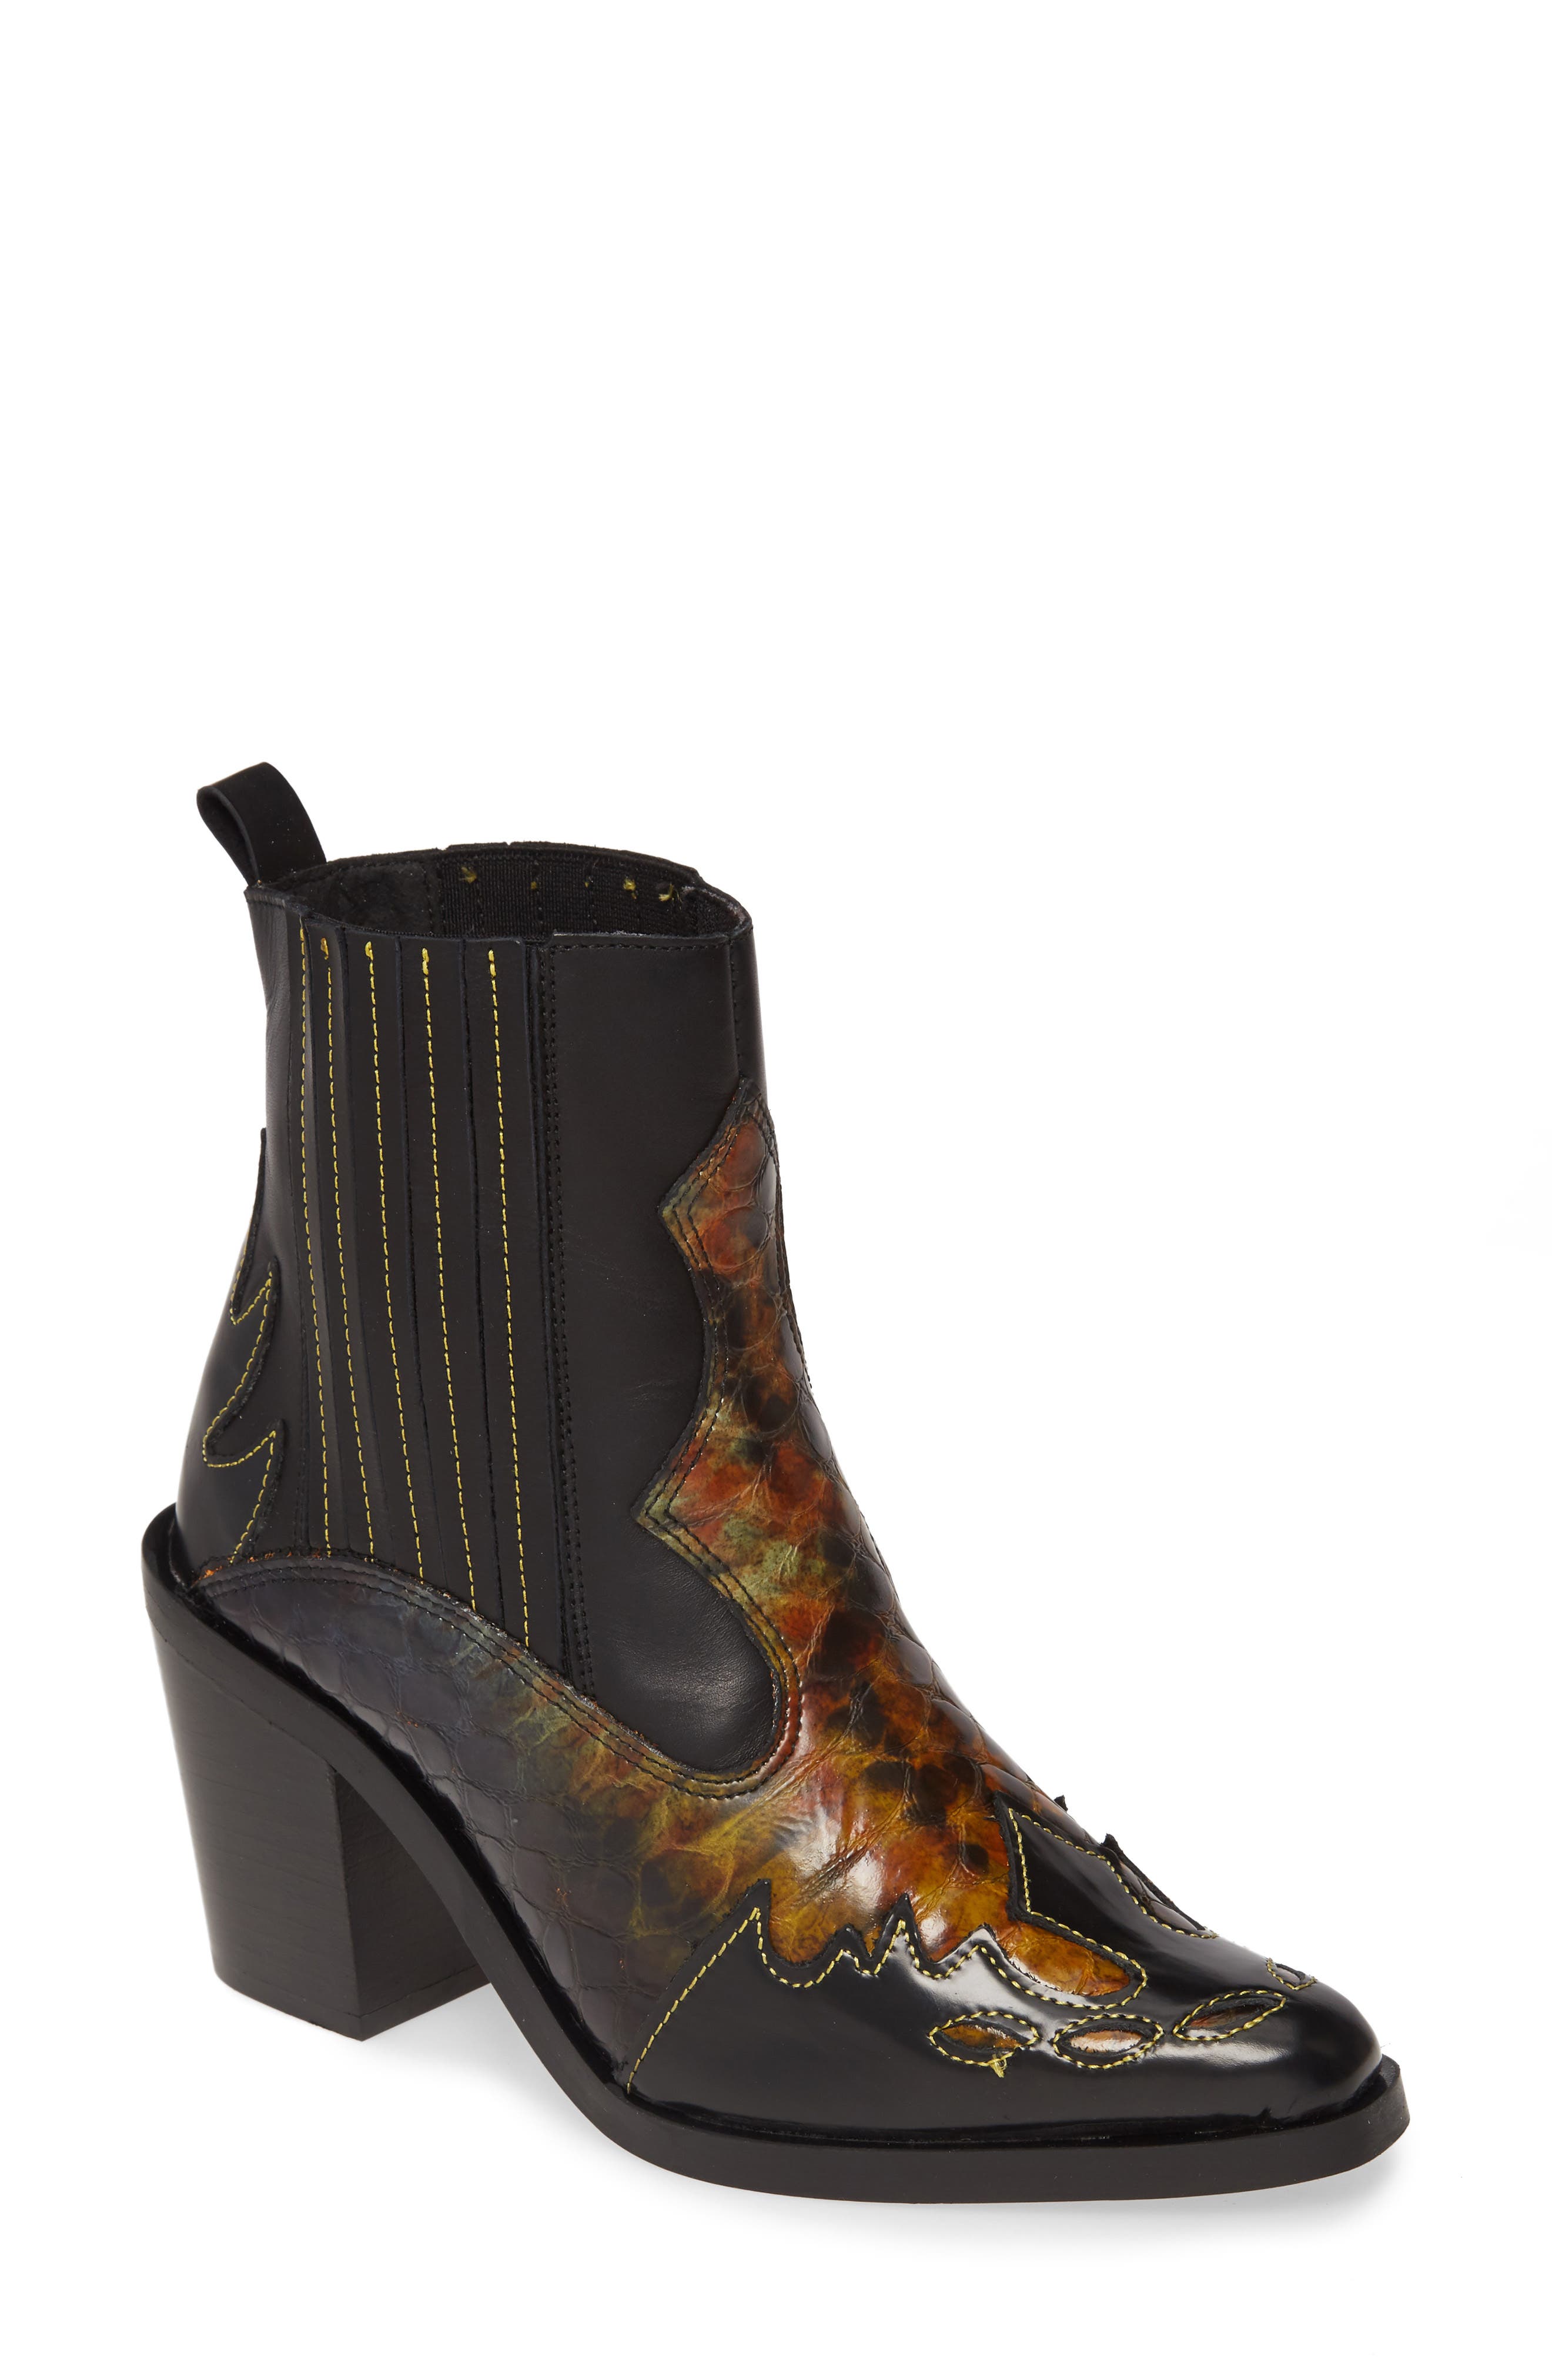 snakeskin chelsea boots womens